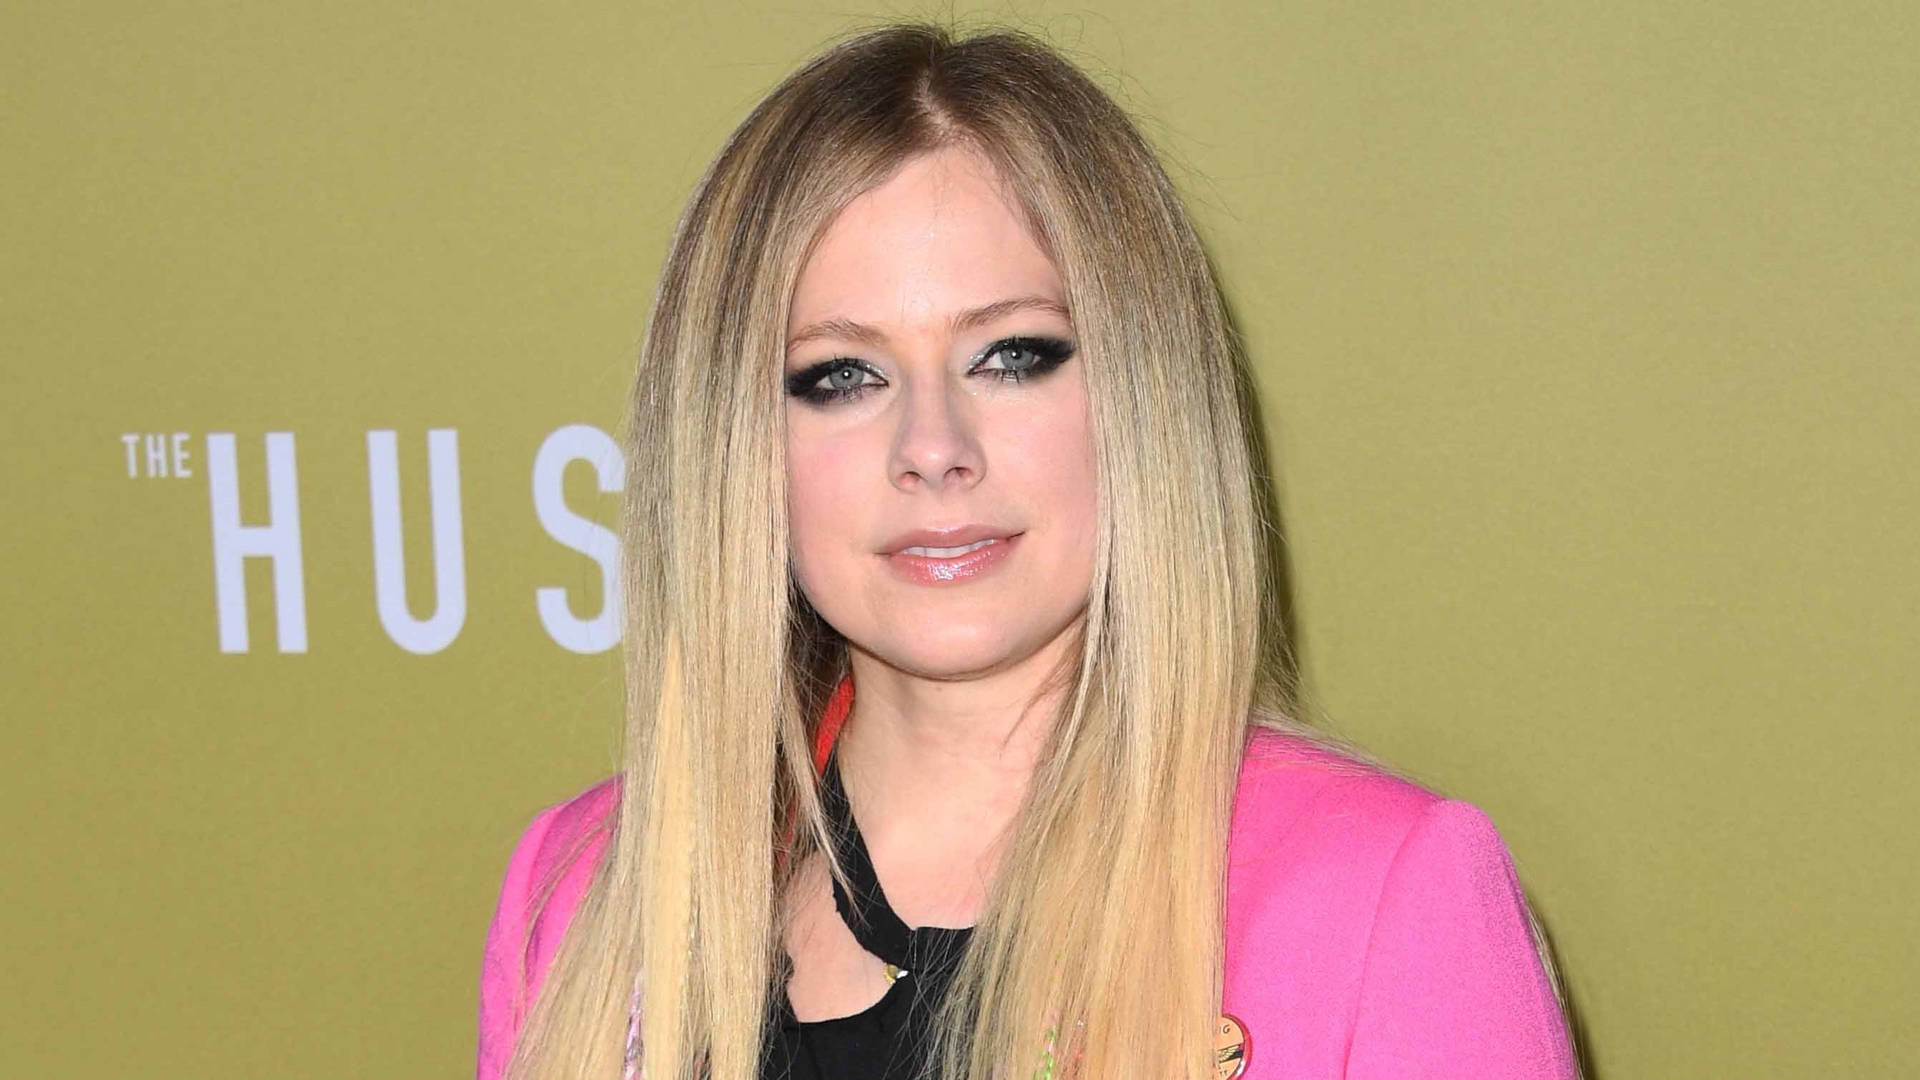 Avril Lavigne The Hustle Background